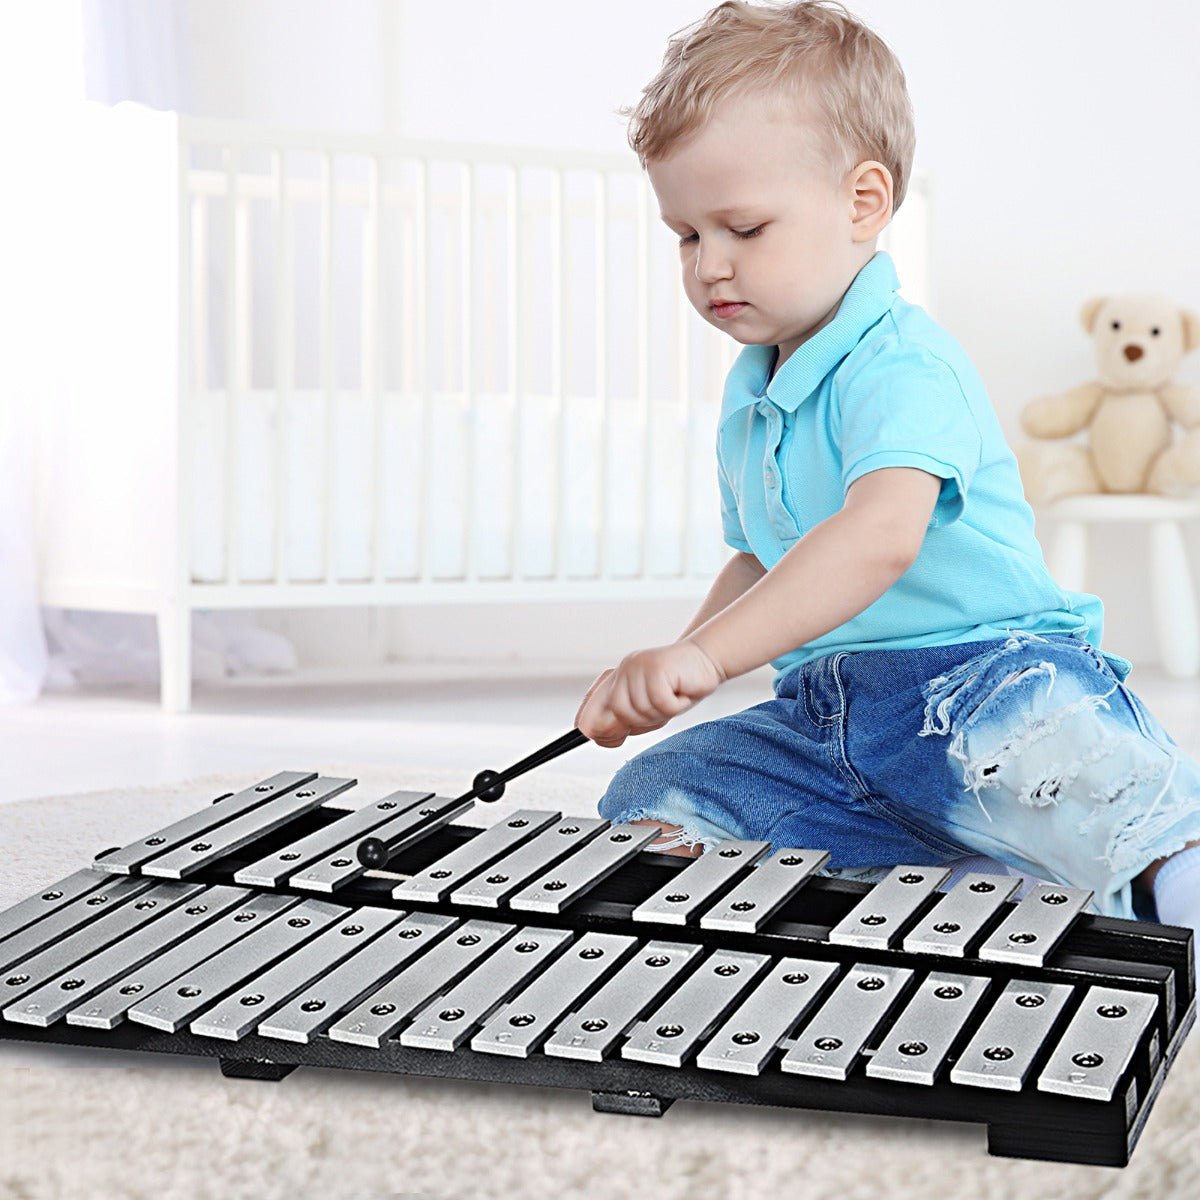 Rhythmic Wonder: 30 Note Glockenspiel Xylophone with Wood Base for Kids